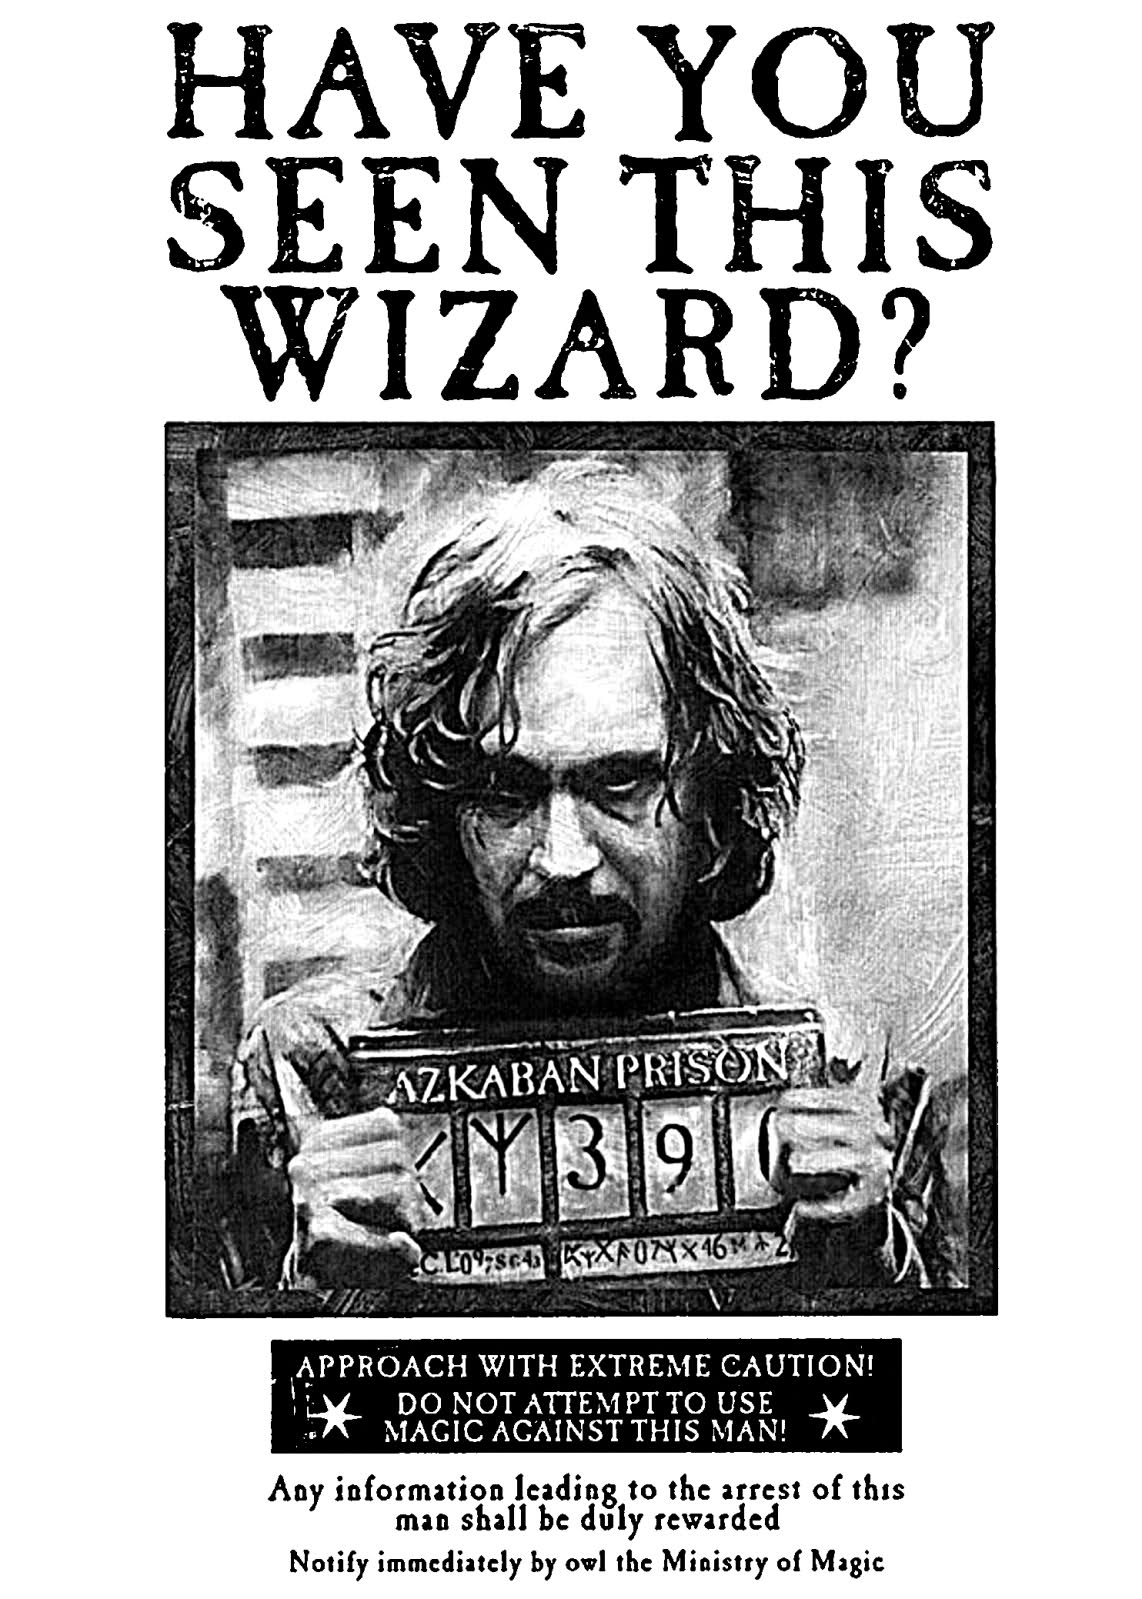 Image Sirius Black Wanted Poster jpg Harry Potter Wiki FANDOM